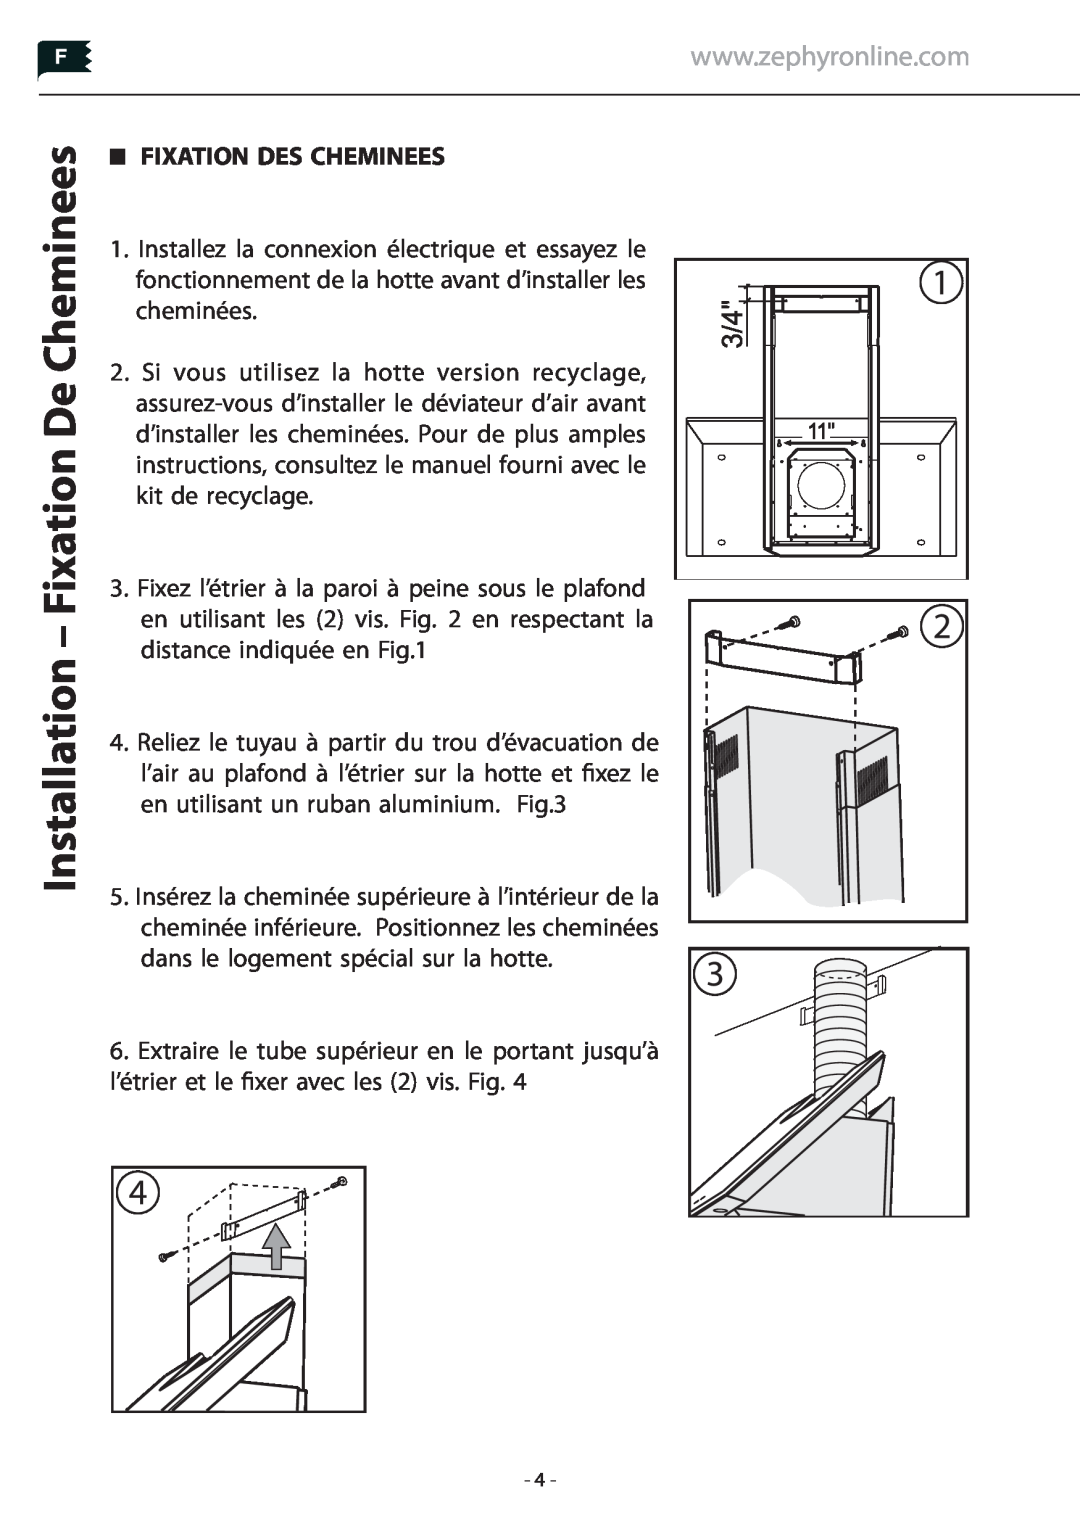 Zephyr Z1C-00PN manual Installation – Fixation De Cheminees, Fixation Des Cheminees 